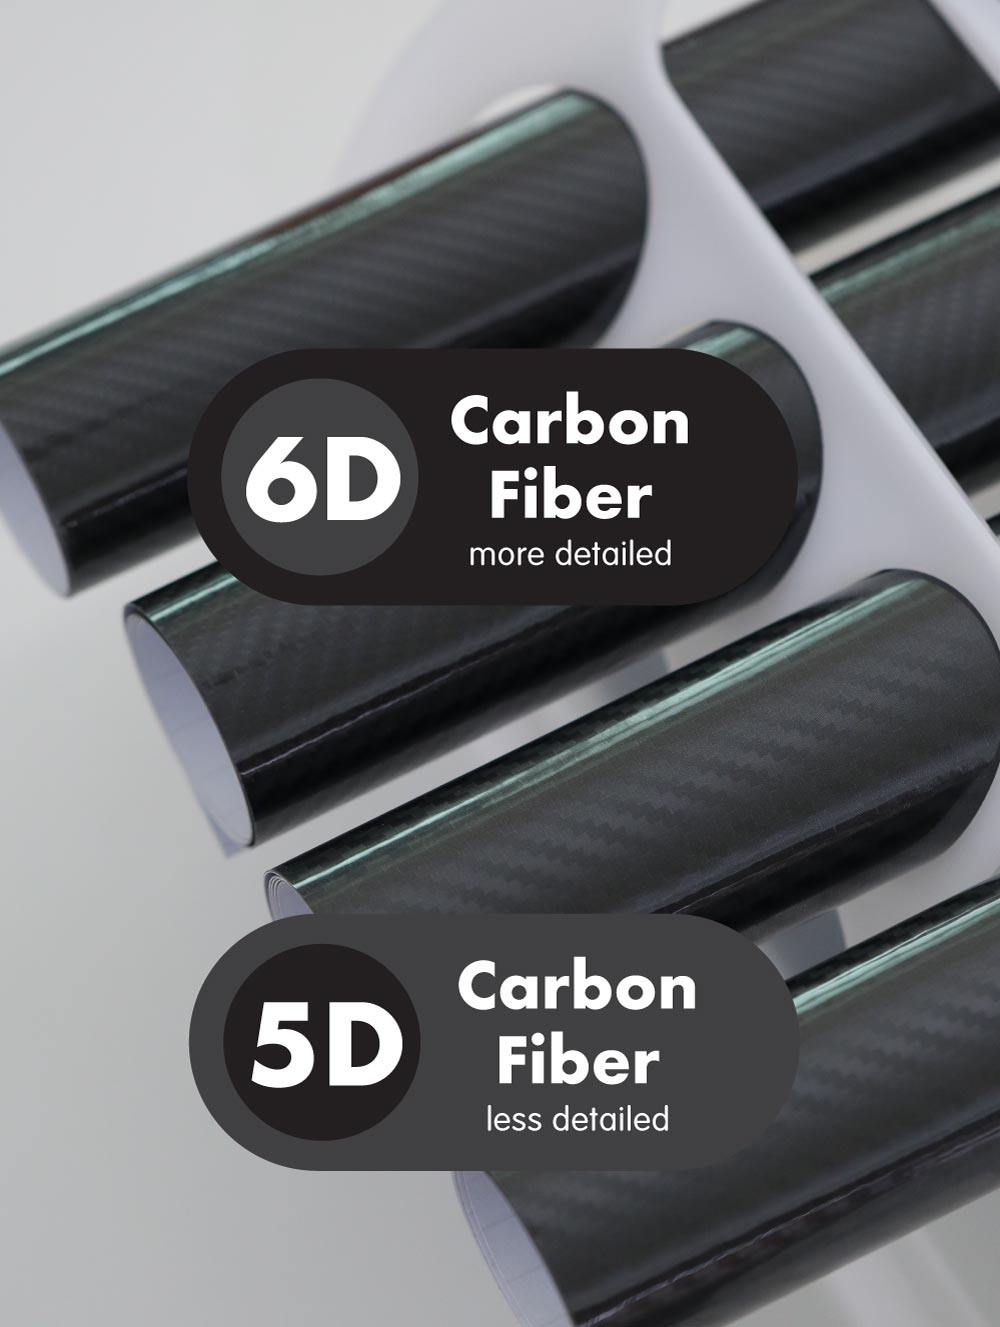 Primewrap Carbon Fiber Chrome Adhesive Vinyl Stickers--GooglyGooeys | Cricut | Arts Craft and DIY Store based in the Philippines